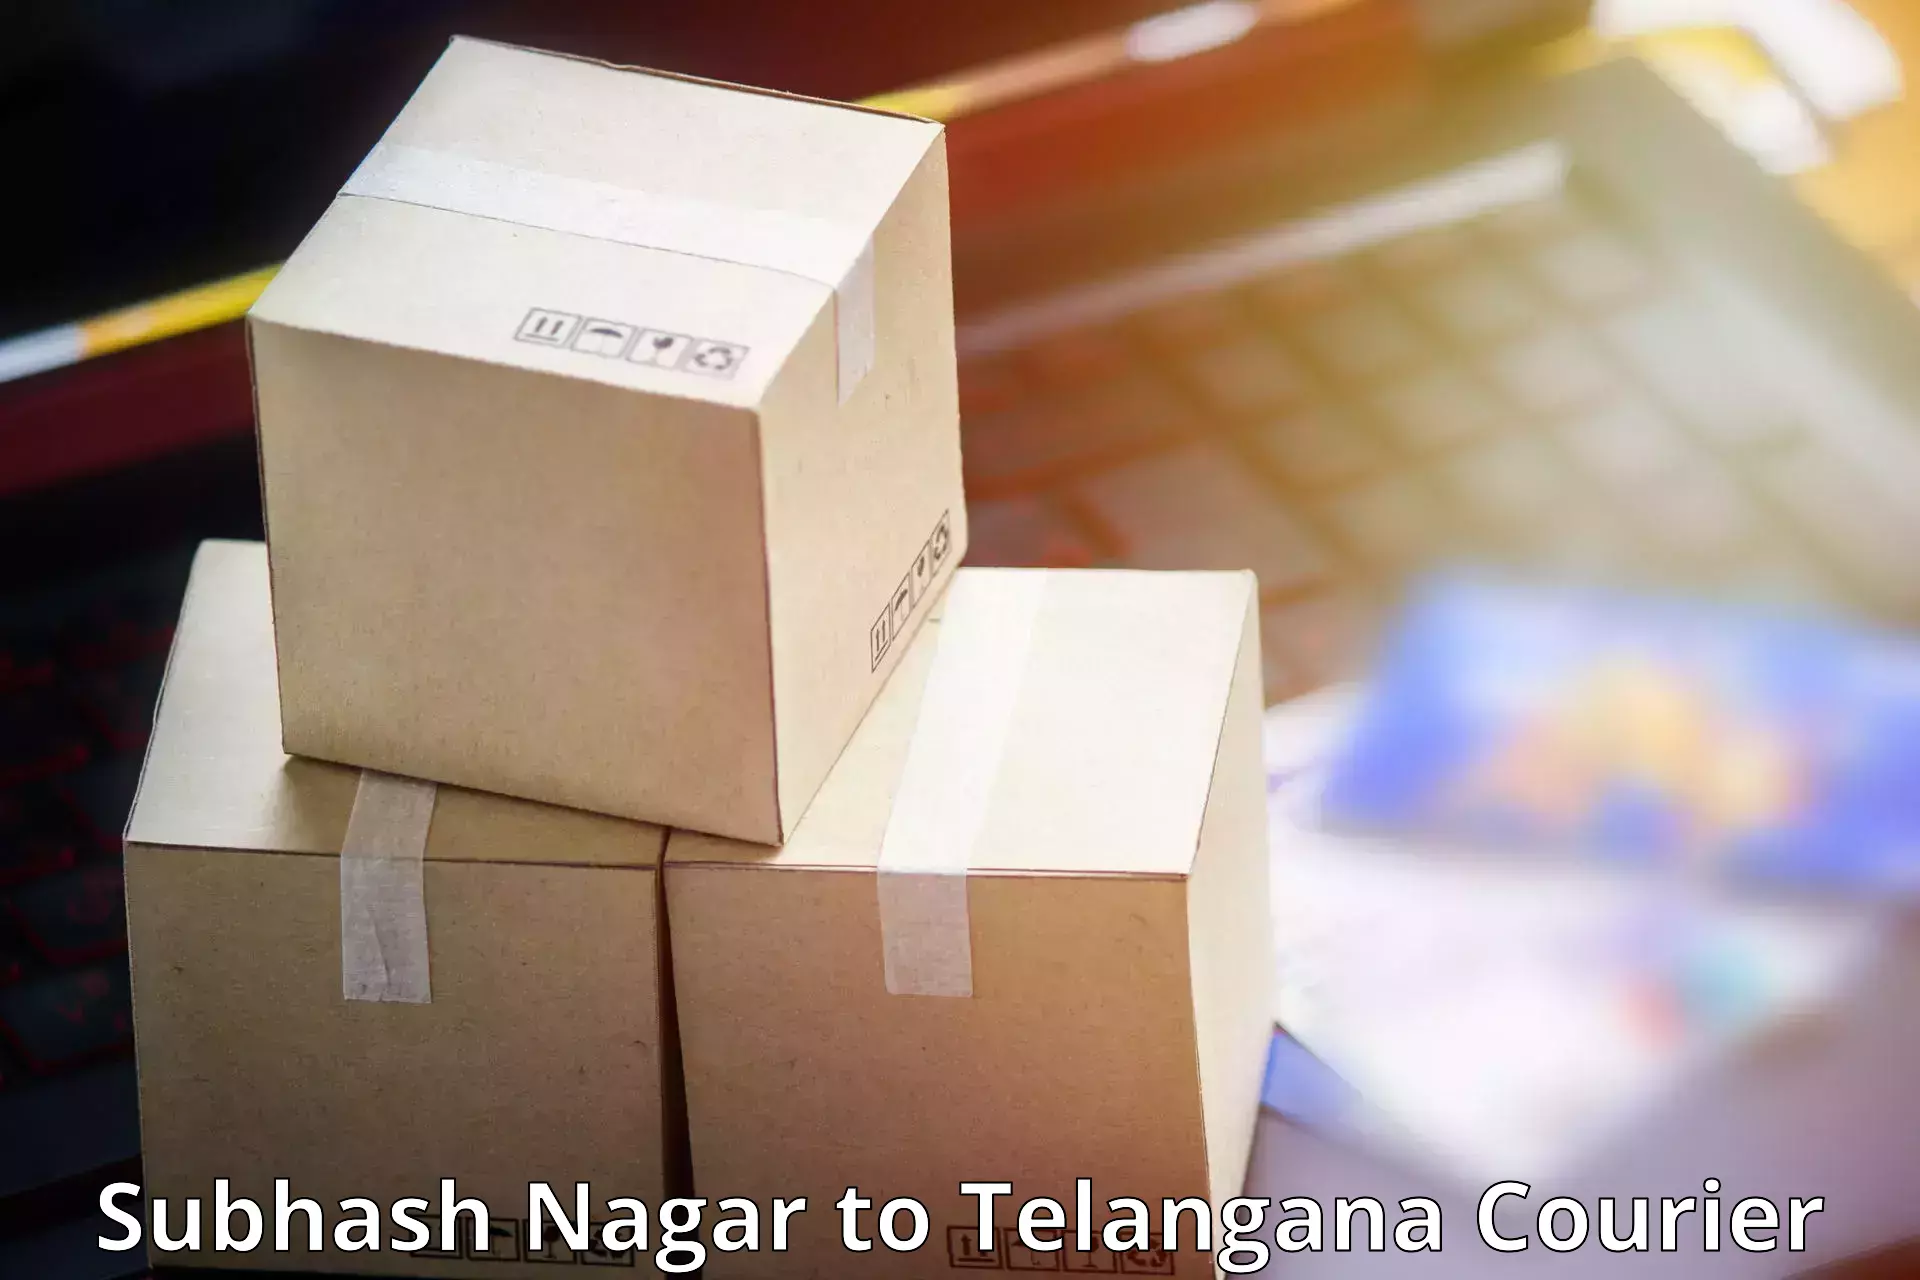 Global logistics network Subhash Nagar to Kallur